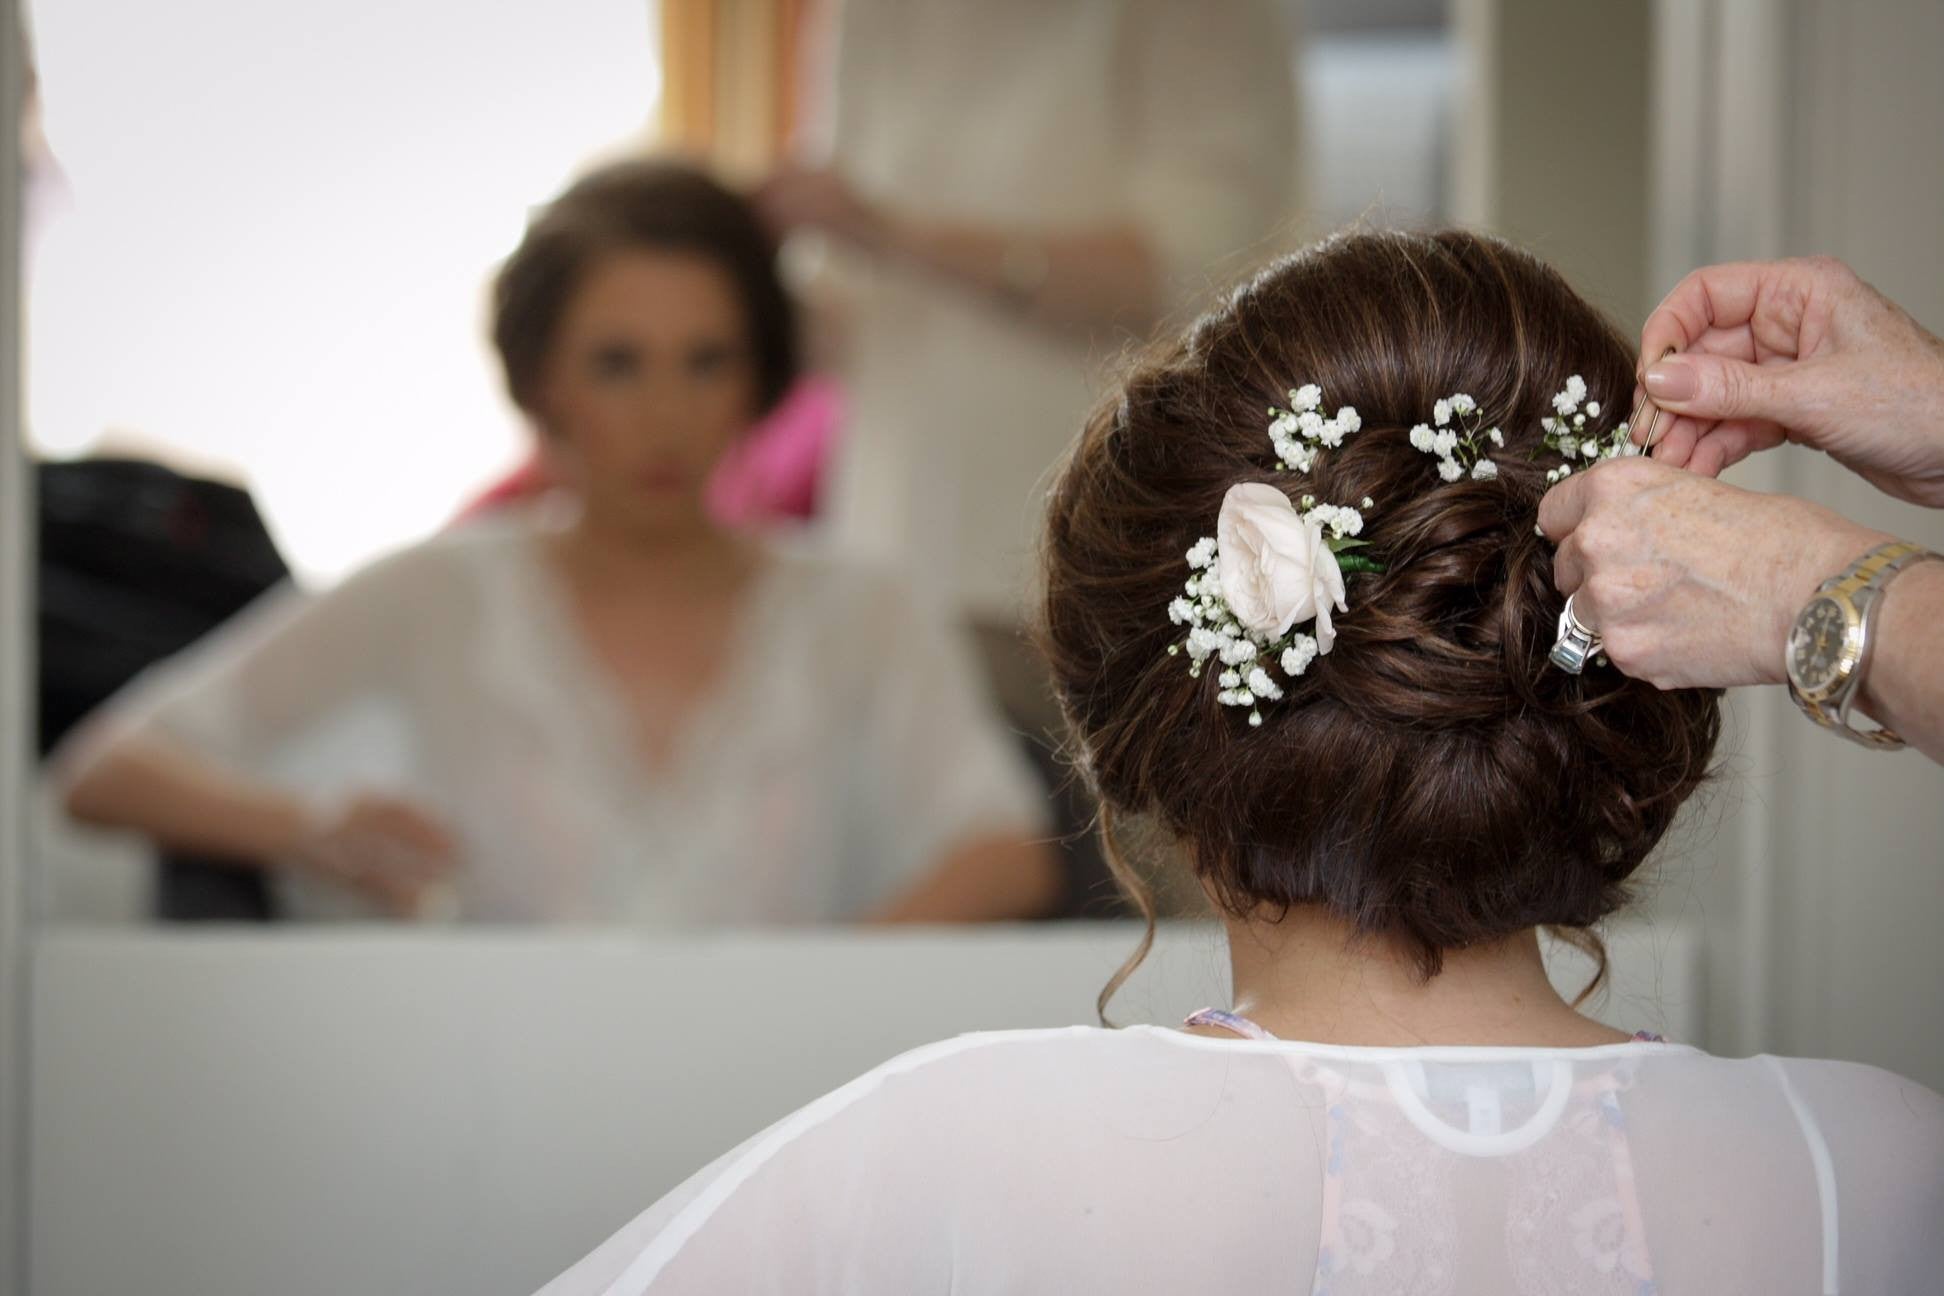 Floral wedding hair decoration with Gypsophila.